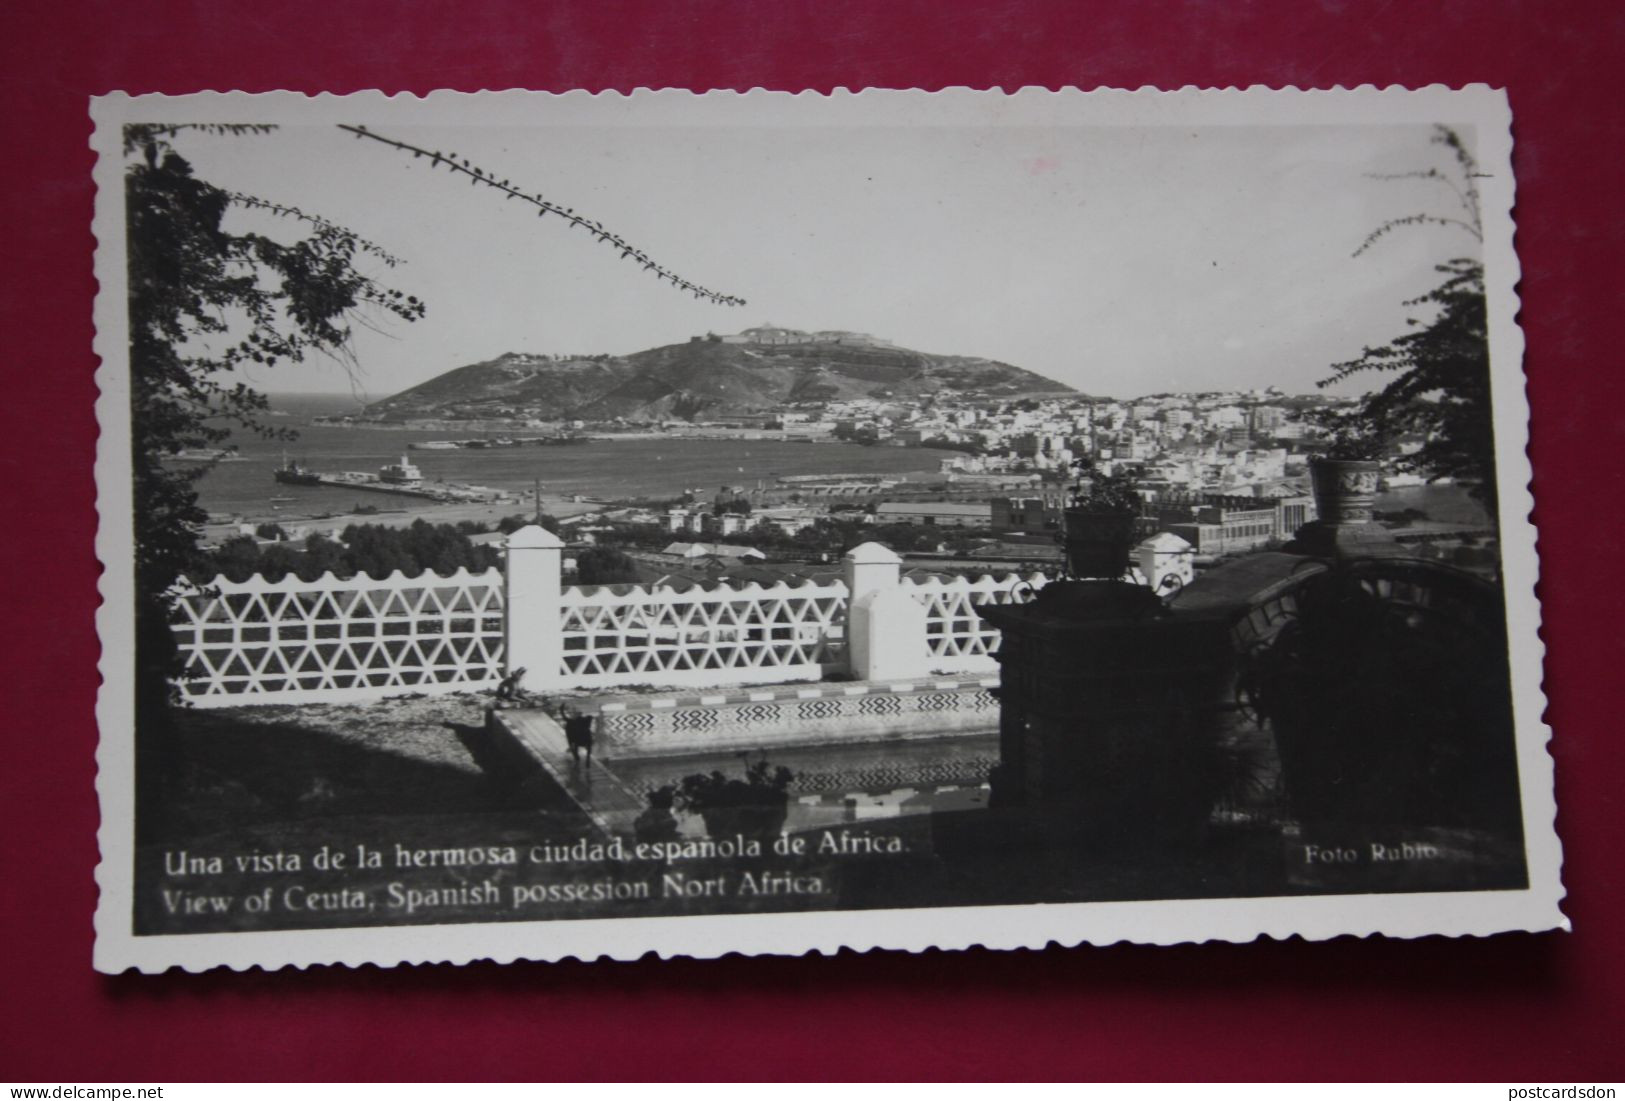 Africa. ESPAÑA, CEUTA - Old Postcard Foto Rubio - Ceuta